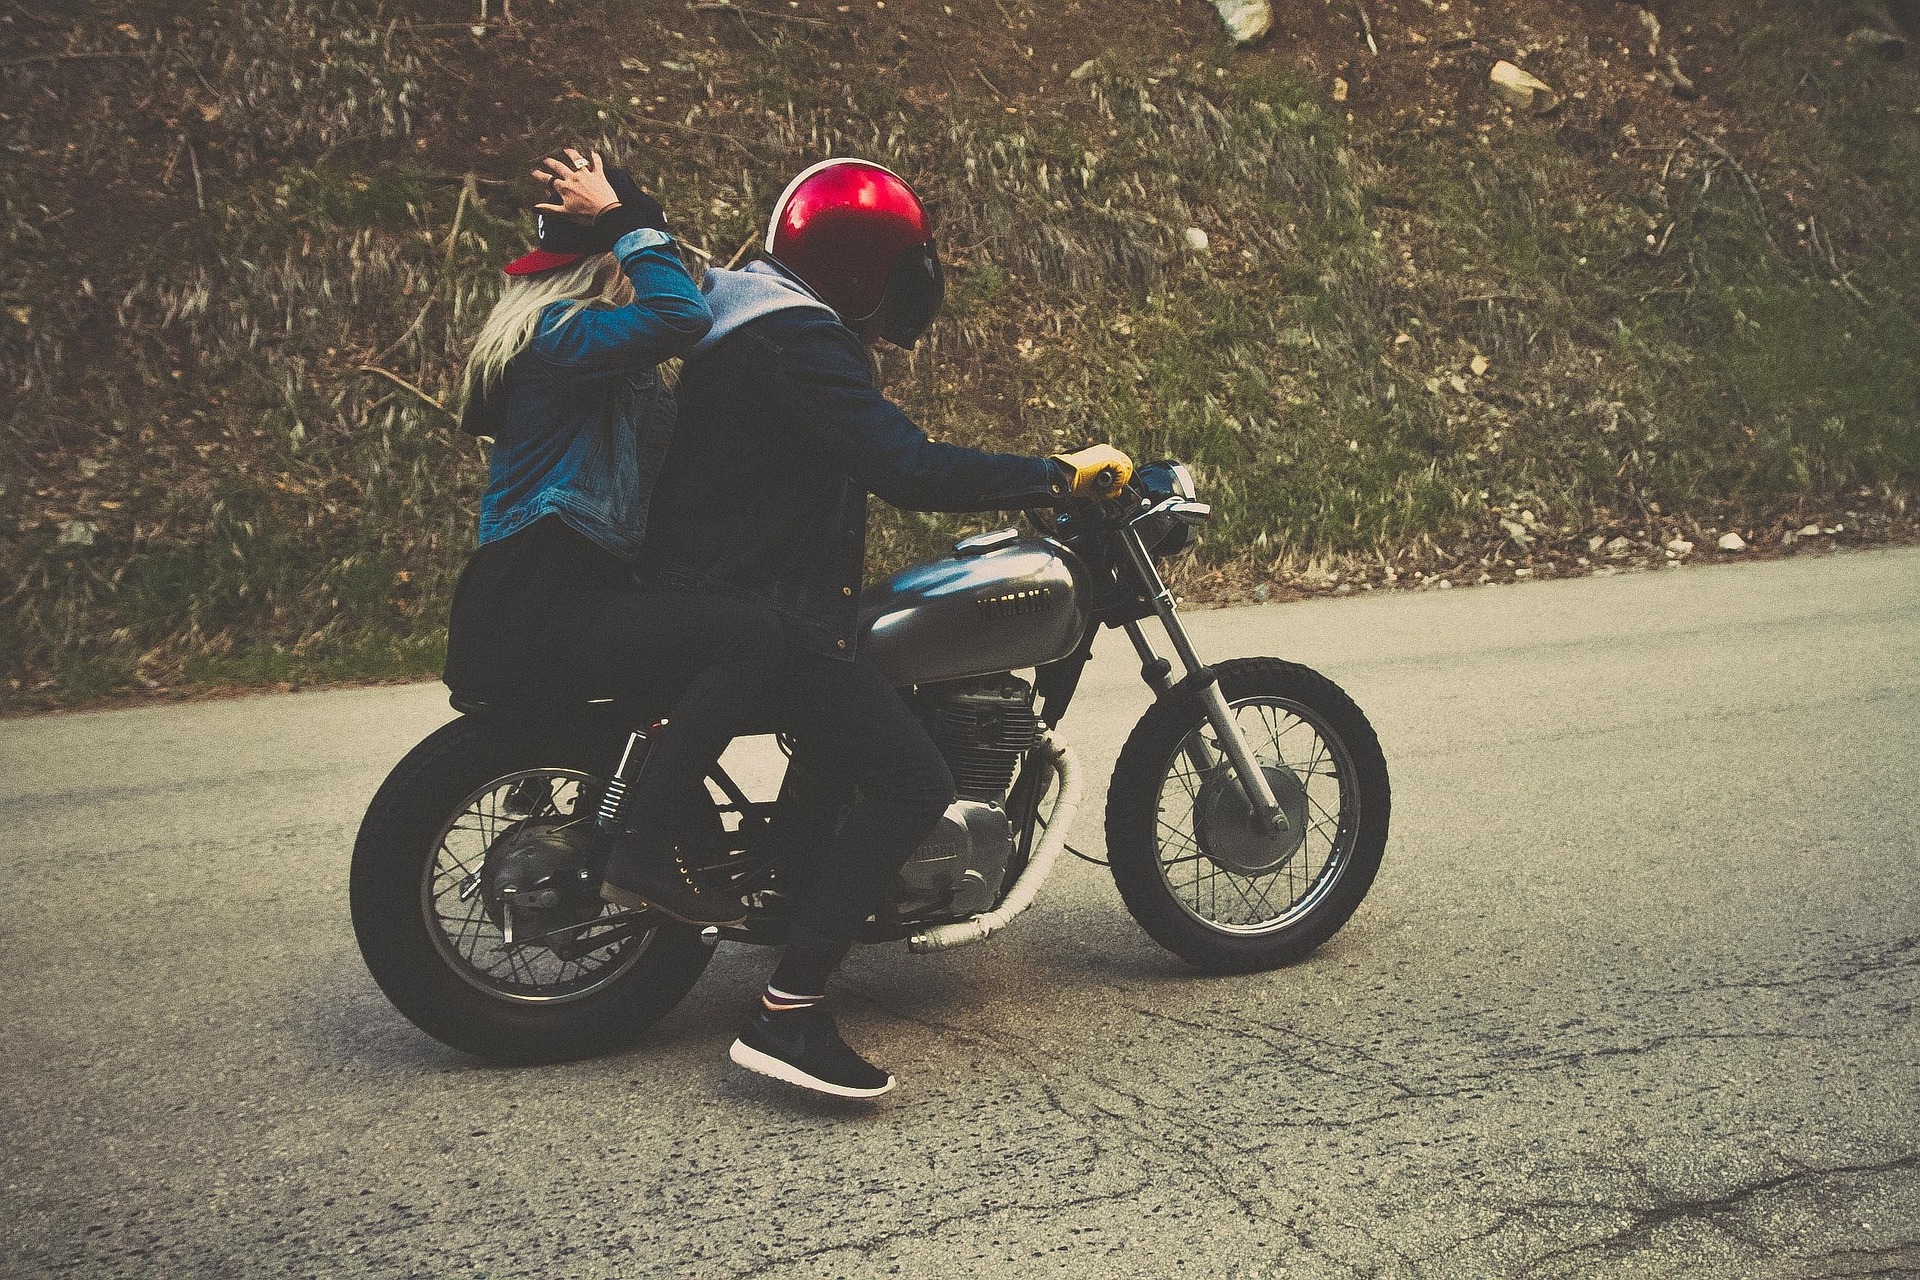 Couple riding a motorbike